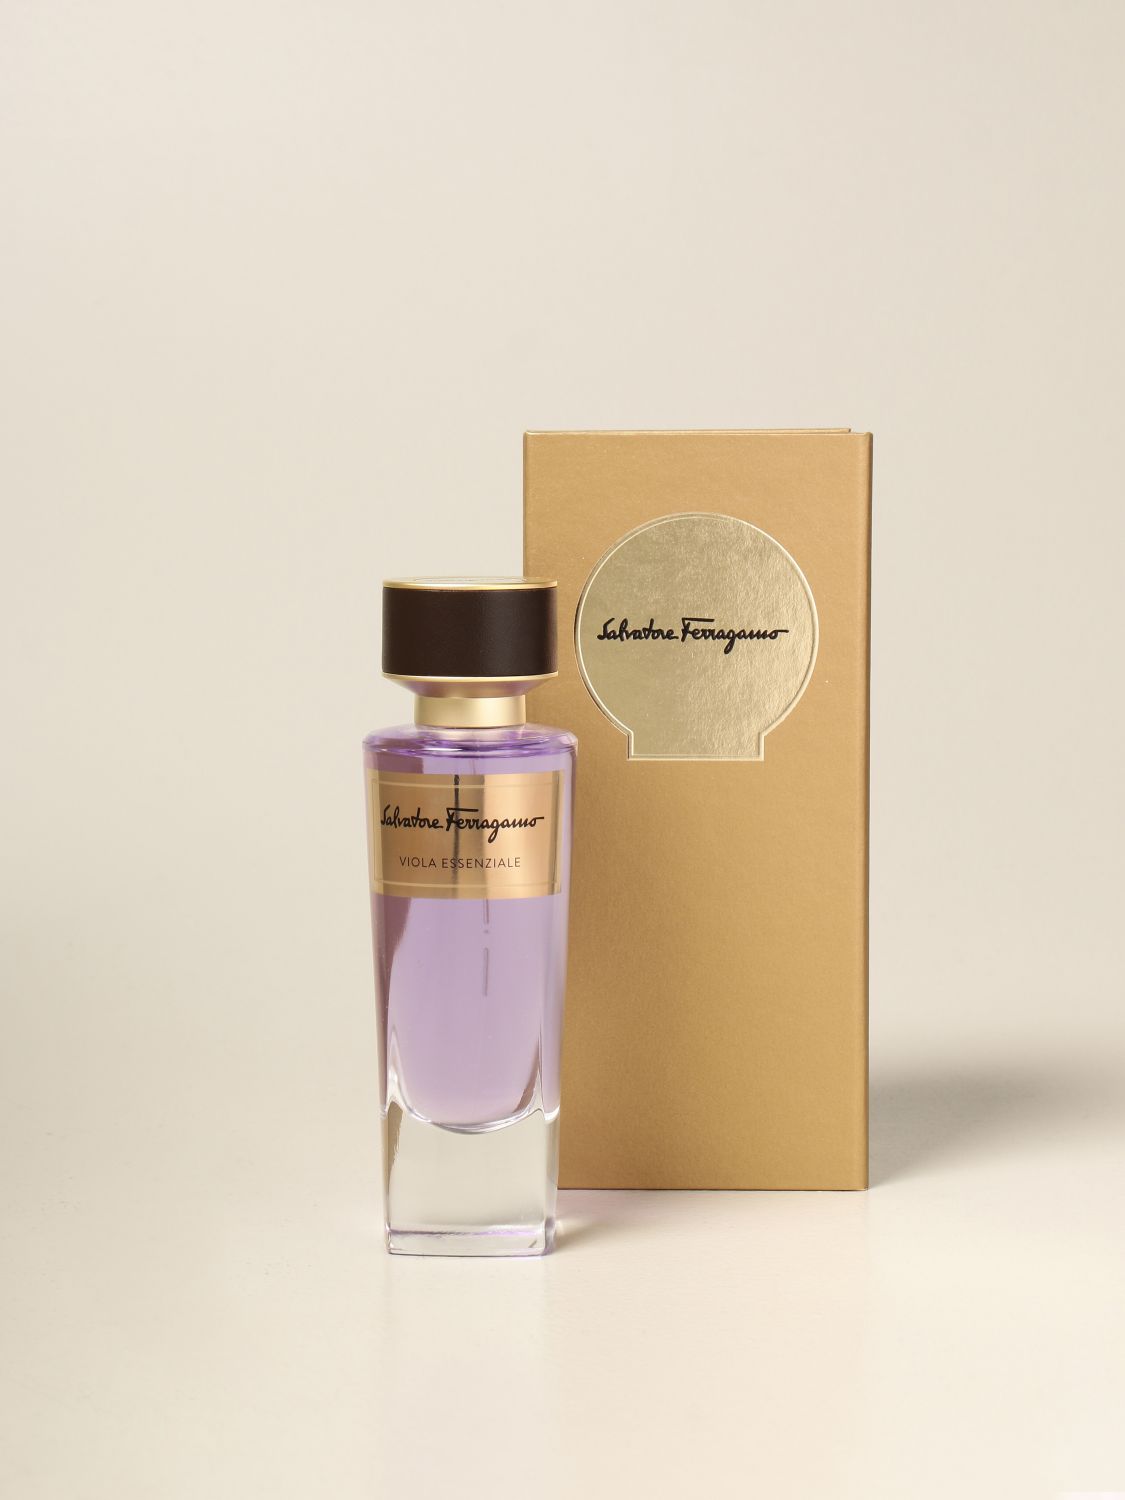 næve Jeg vasker mit tøj diameter FERRAGAMO: Viola Essenziale Perfume 100 ml - | Ferragamo perfume 58602  online on GIGLIO.COM